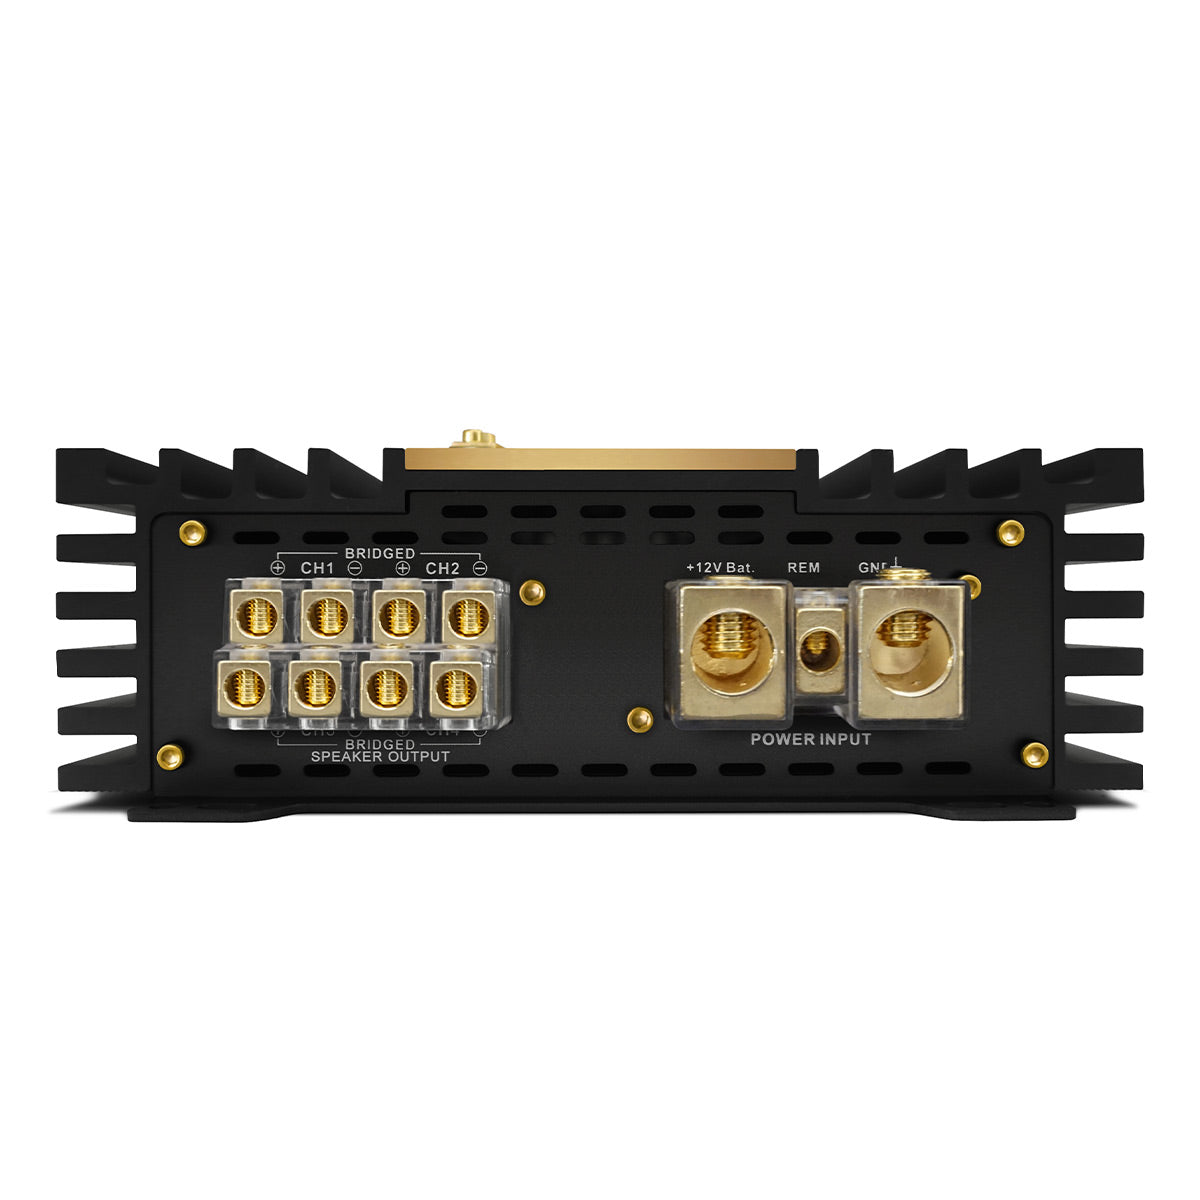 Zapco Z-150.4 AP 4-Channel Class AB Audiophile Amplifier